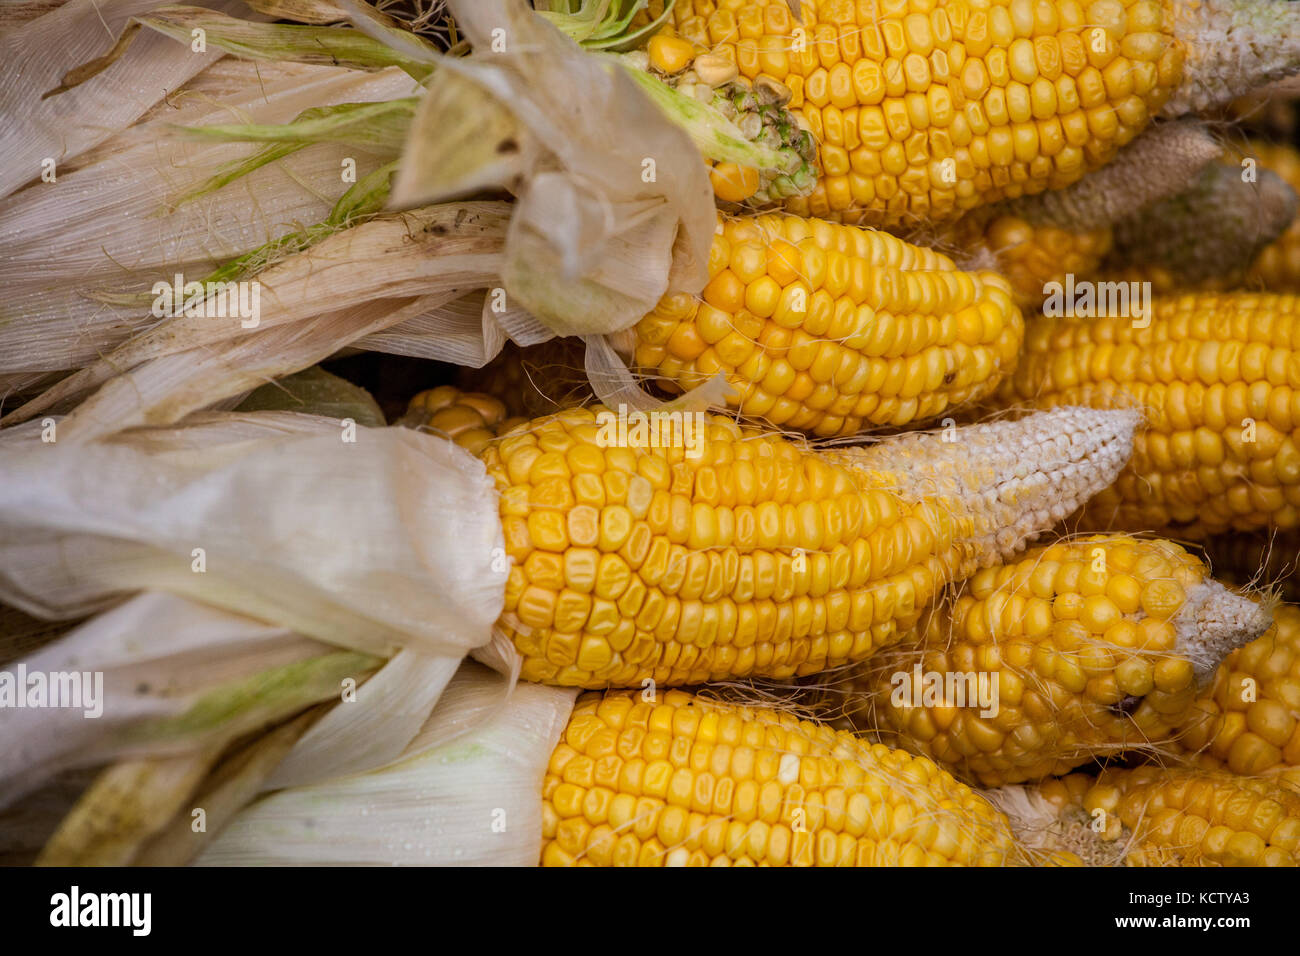 Mazorcas de maíz amarillas, recolectadas y cosechadas, mostrando varias mazorcas de maíz, granos Zea mays Foto de stock